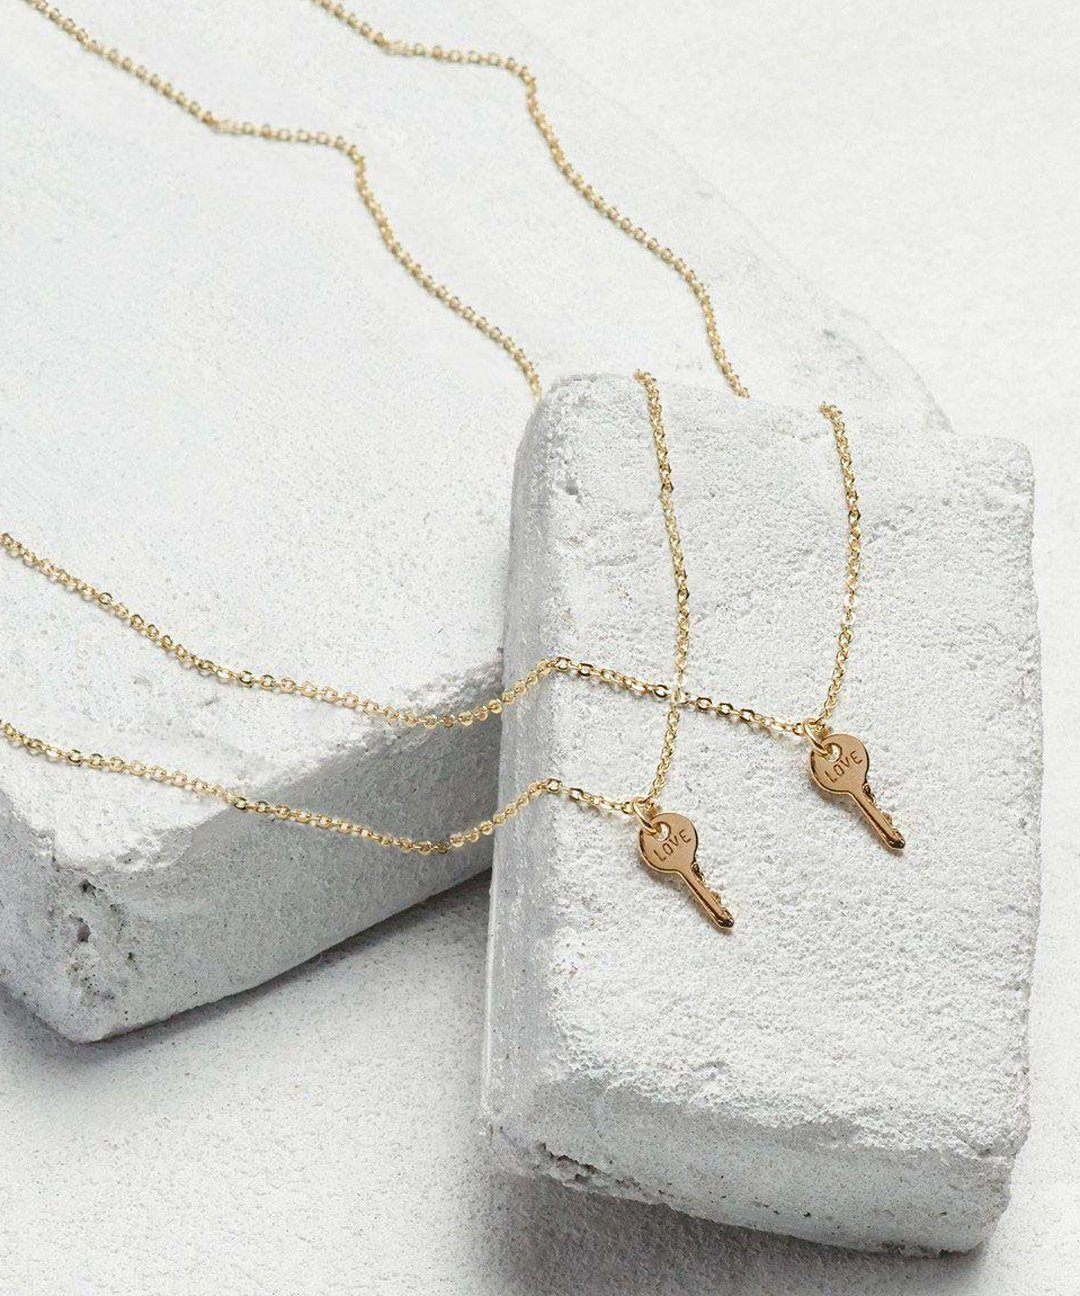 Best Friend Mini Key Necklace Sets Necklaces The Giving Keys LOVE Gold